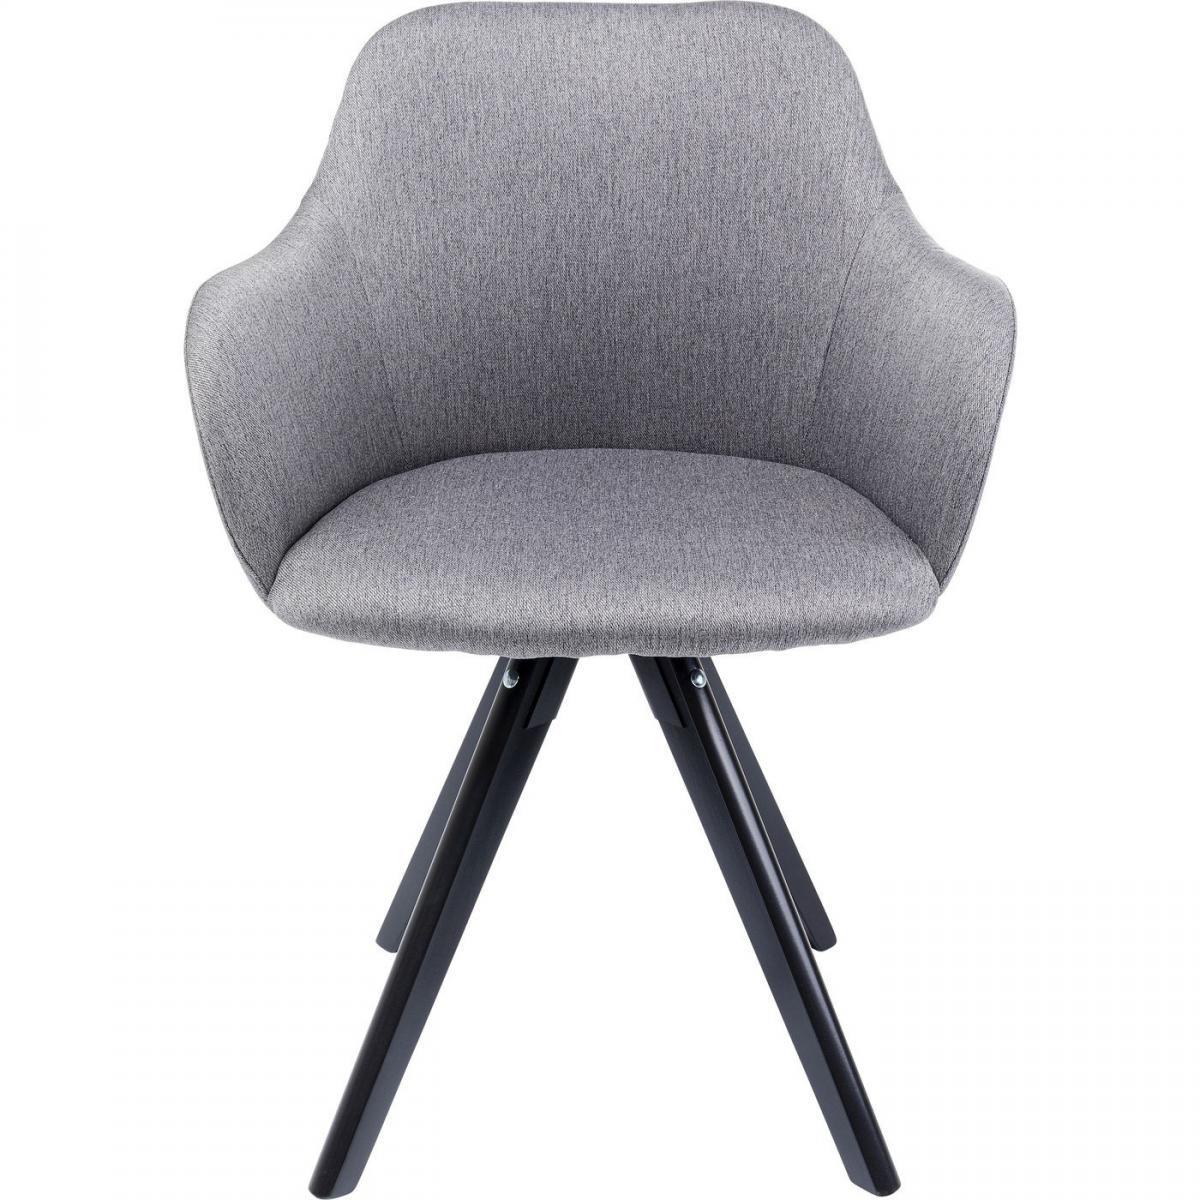 Karedesign - Chaise pivotante Lady Loco grise Kare Design - Chaises